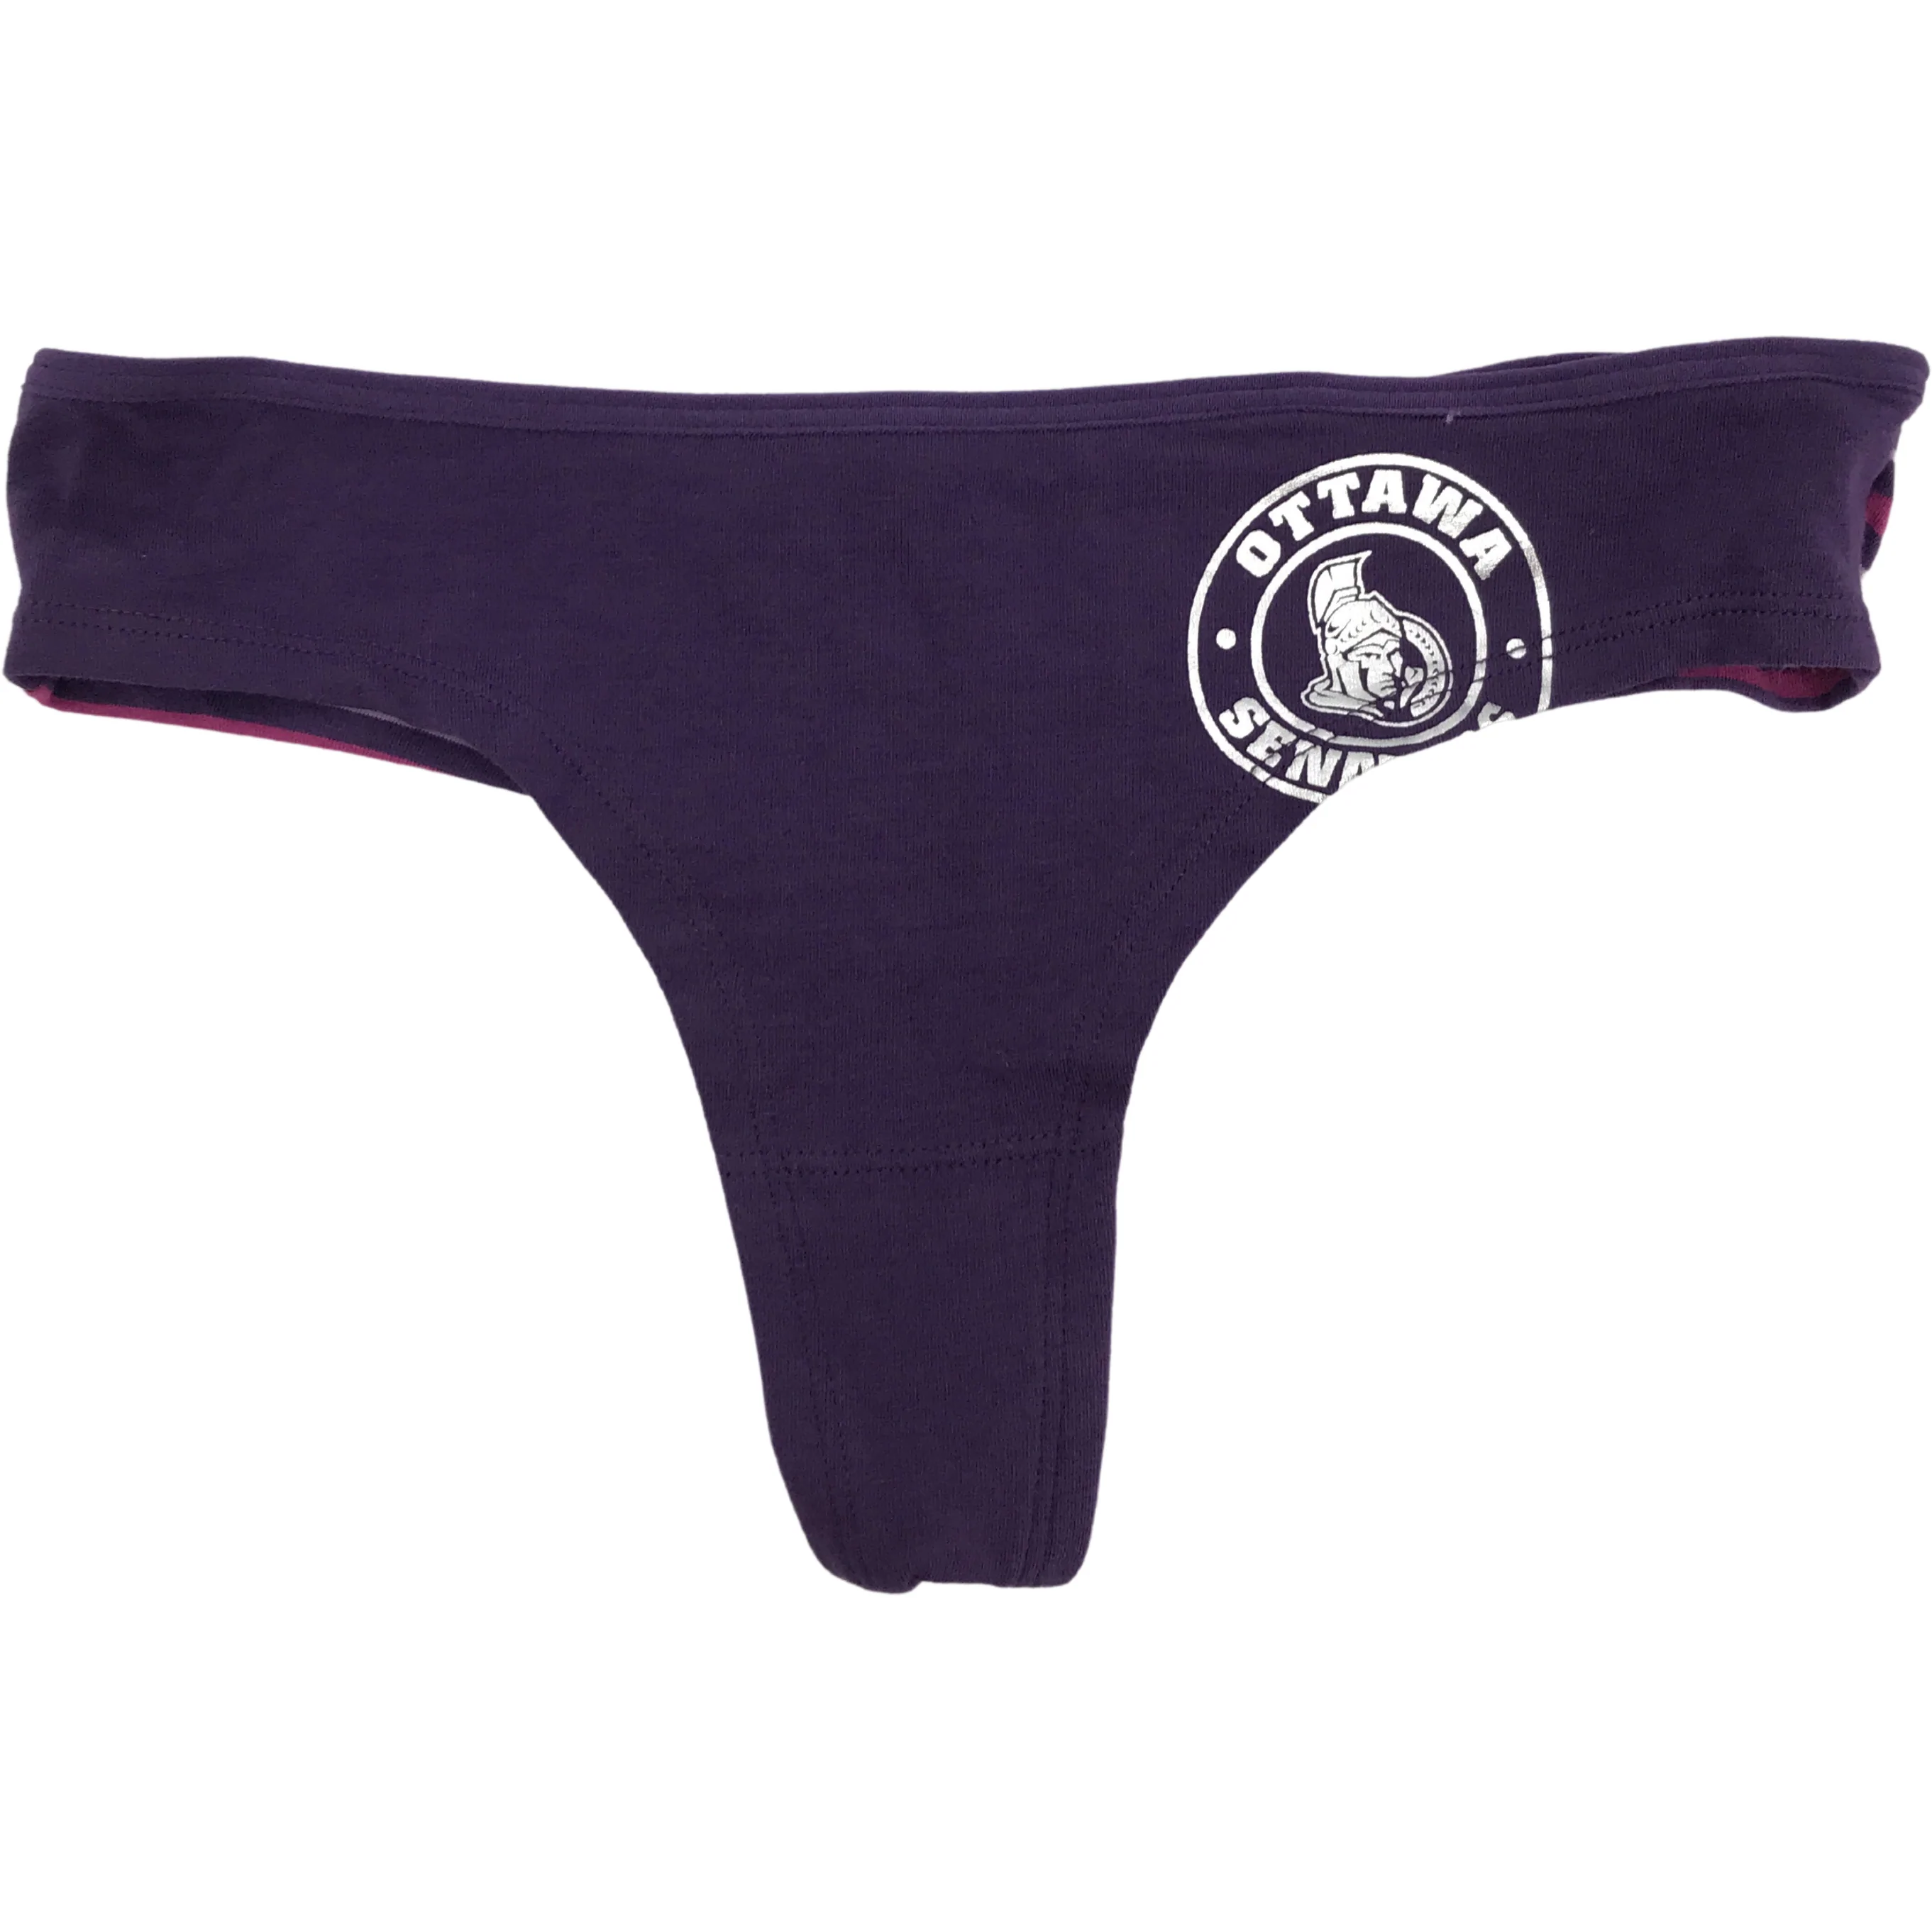 NHL Ottawa Senators Ladies Thong Underwear / Various Sizes / 2 Pack / Panties / Purple / Ottawa Senators Logo